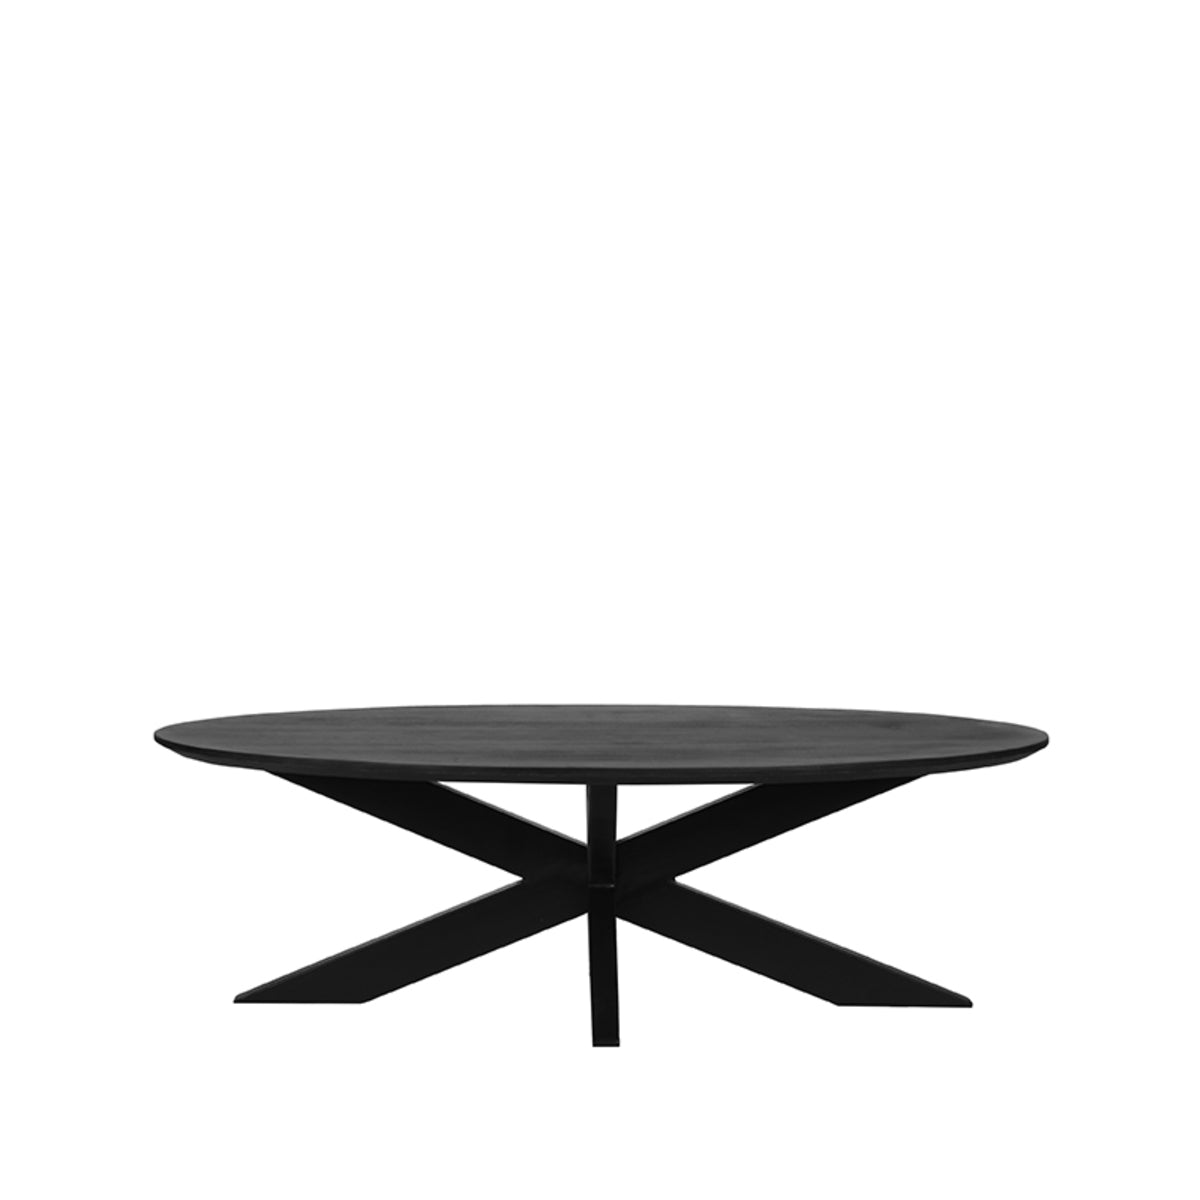 LABEL51 Coffee table Zion - Black - Mango wood